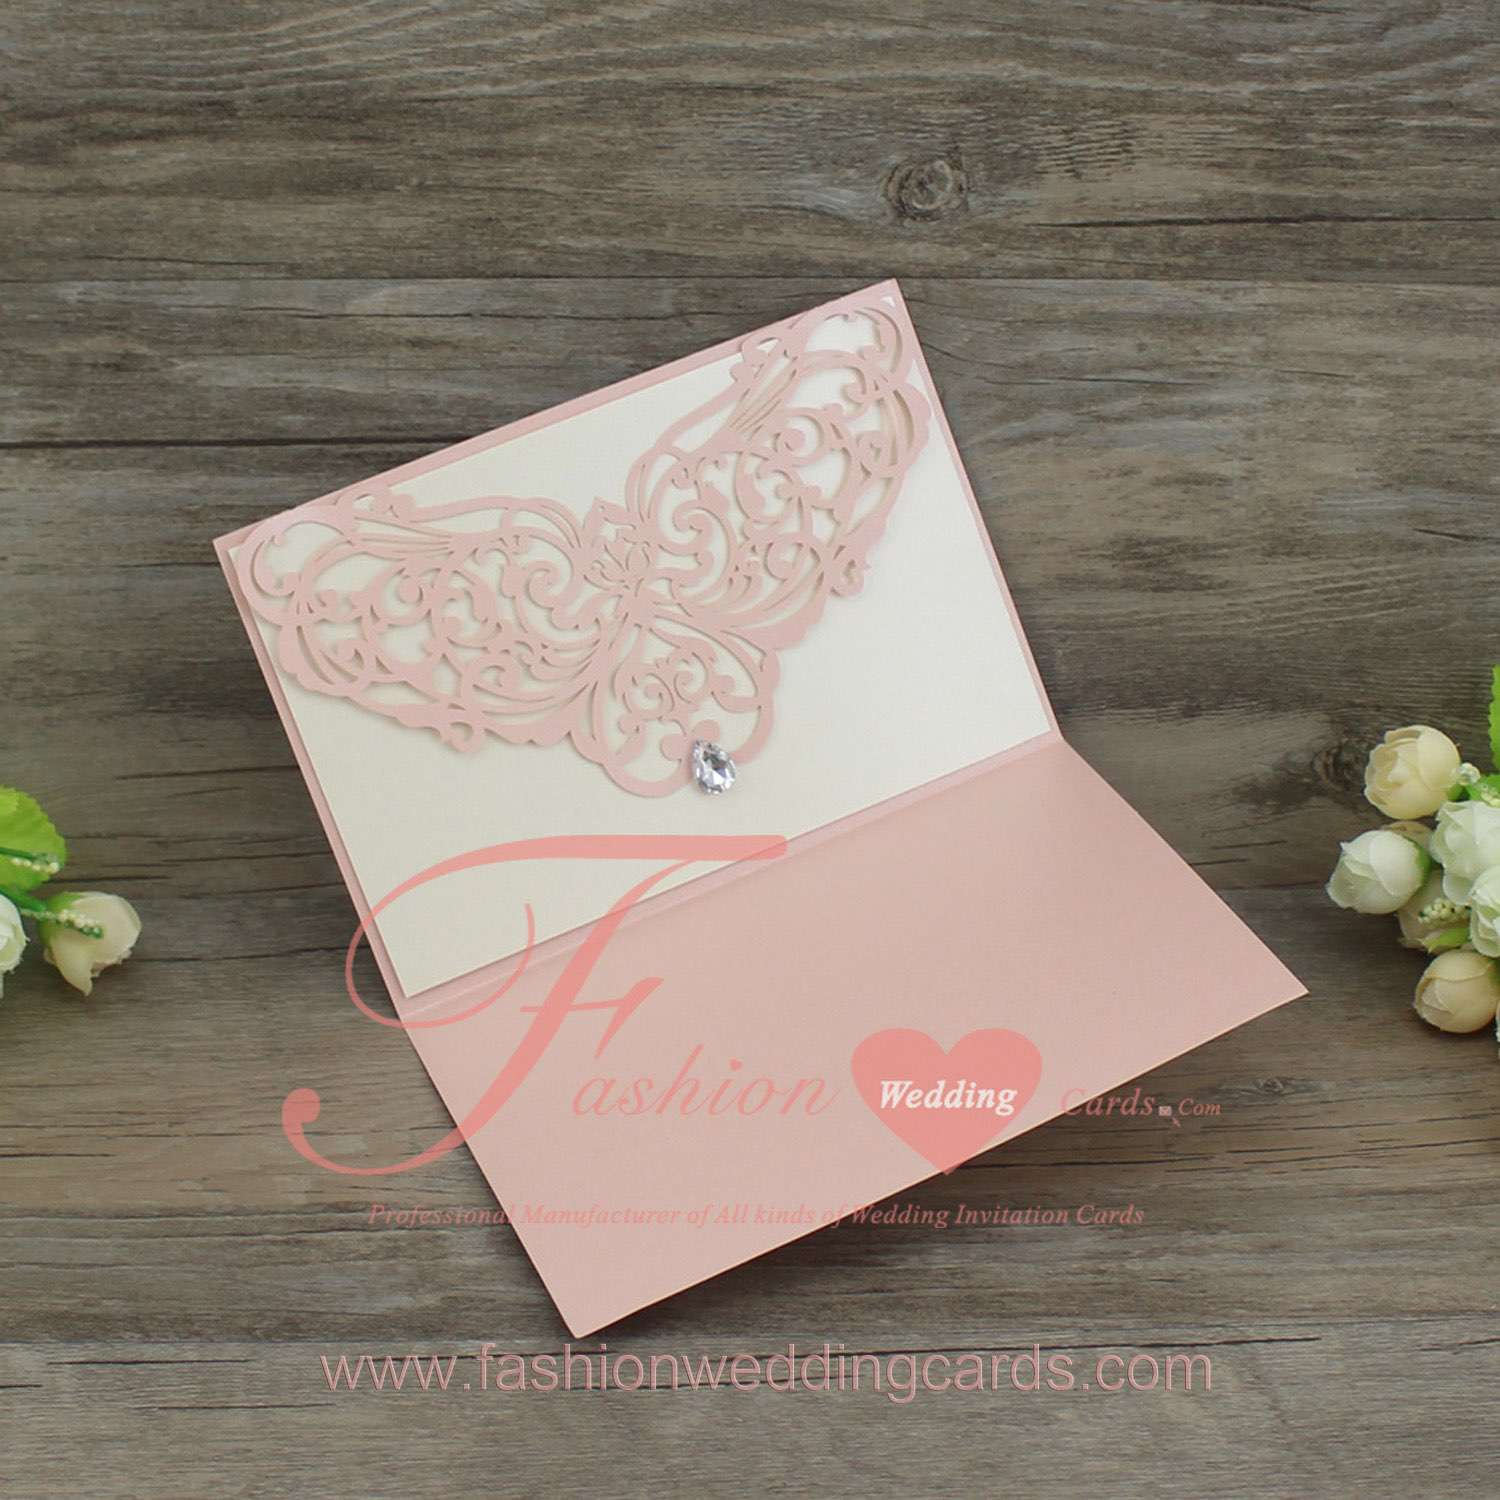 Laser Cut Wedding Invitation Cards Design for Marriage